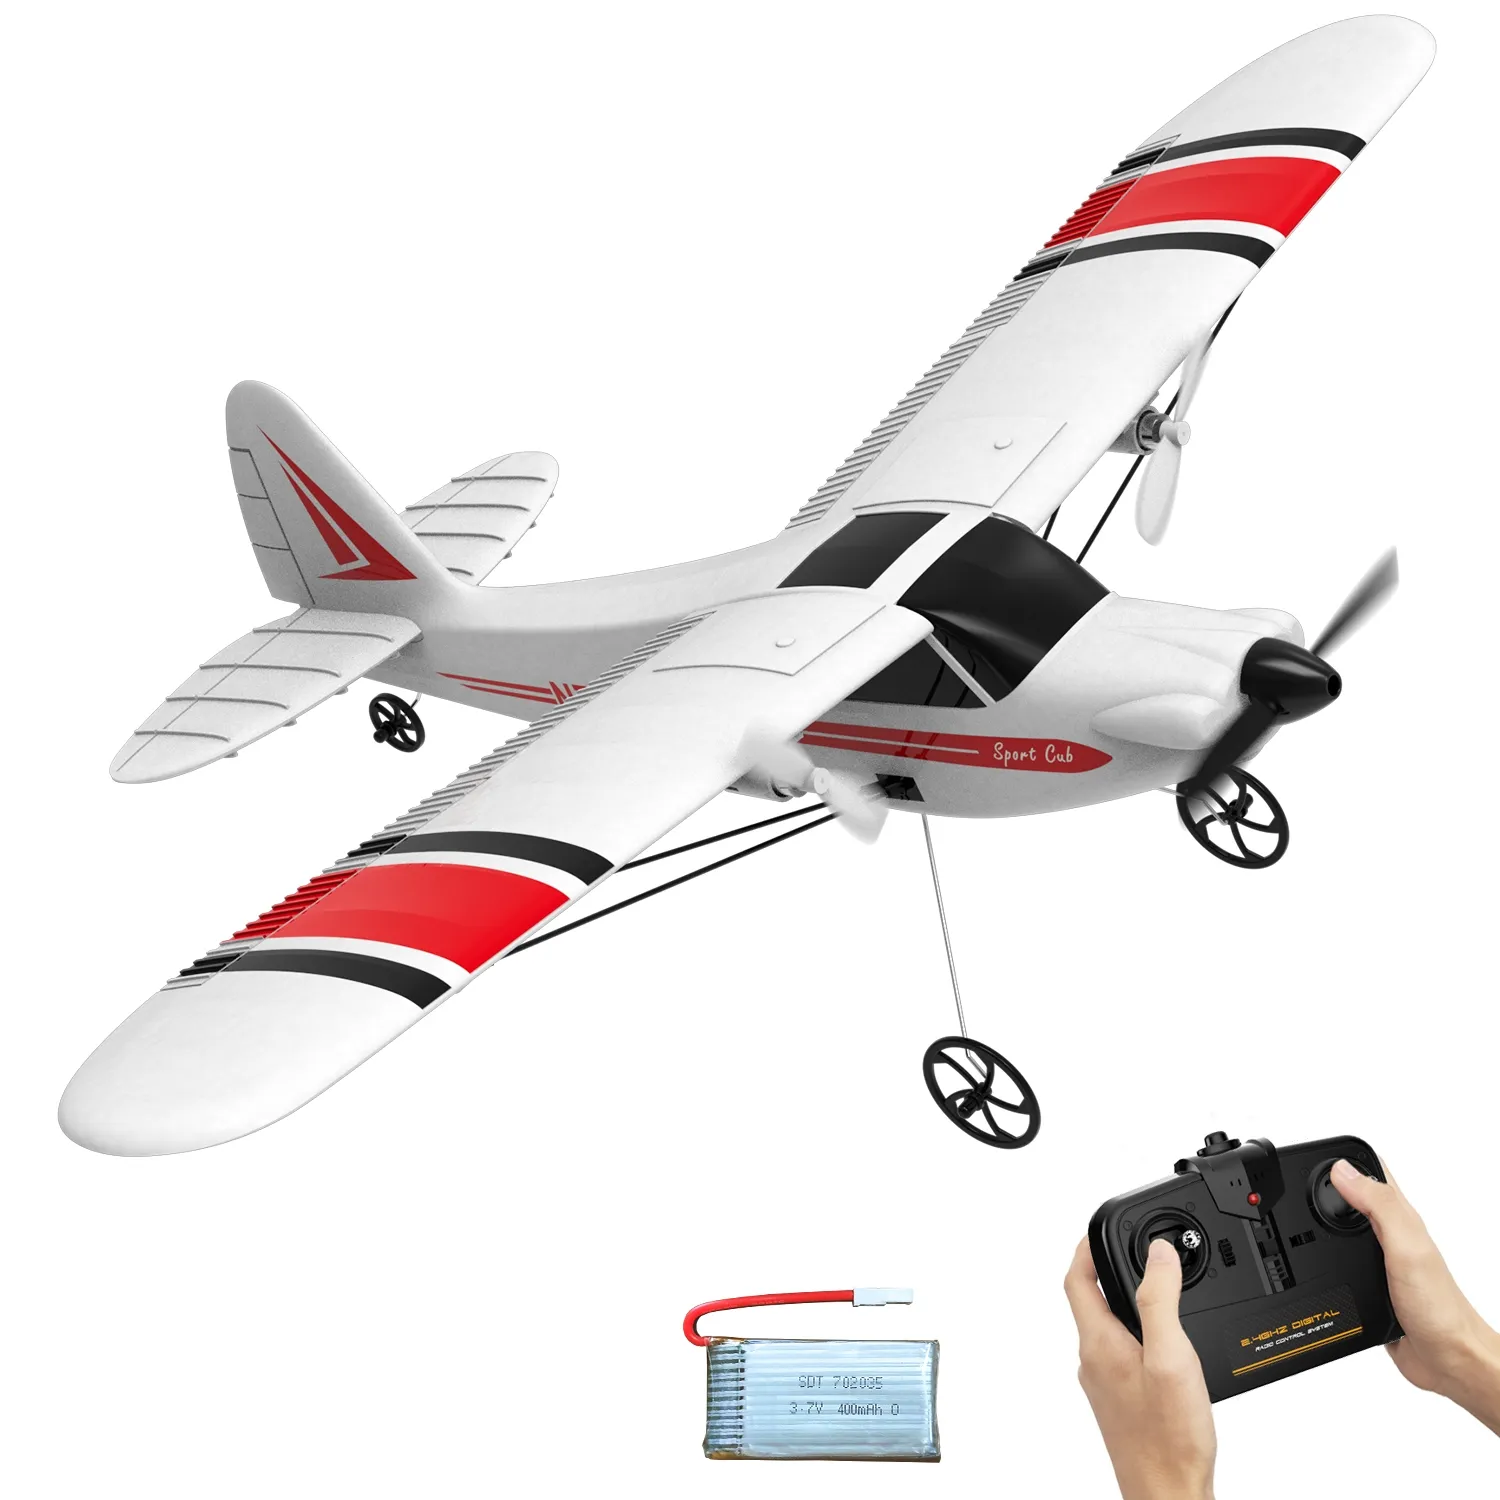 SportCub 2-CH 400mm RC plane RTF radio control Aircraft electric toys RC Airplane Outdoor model for beginner kids children